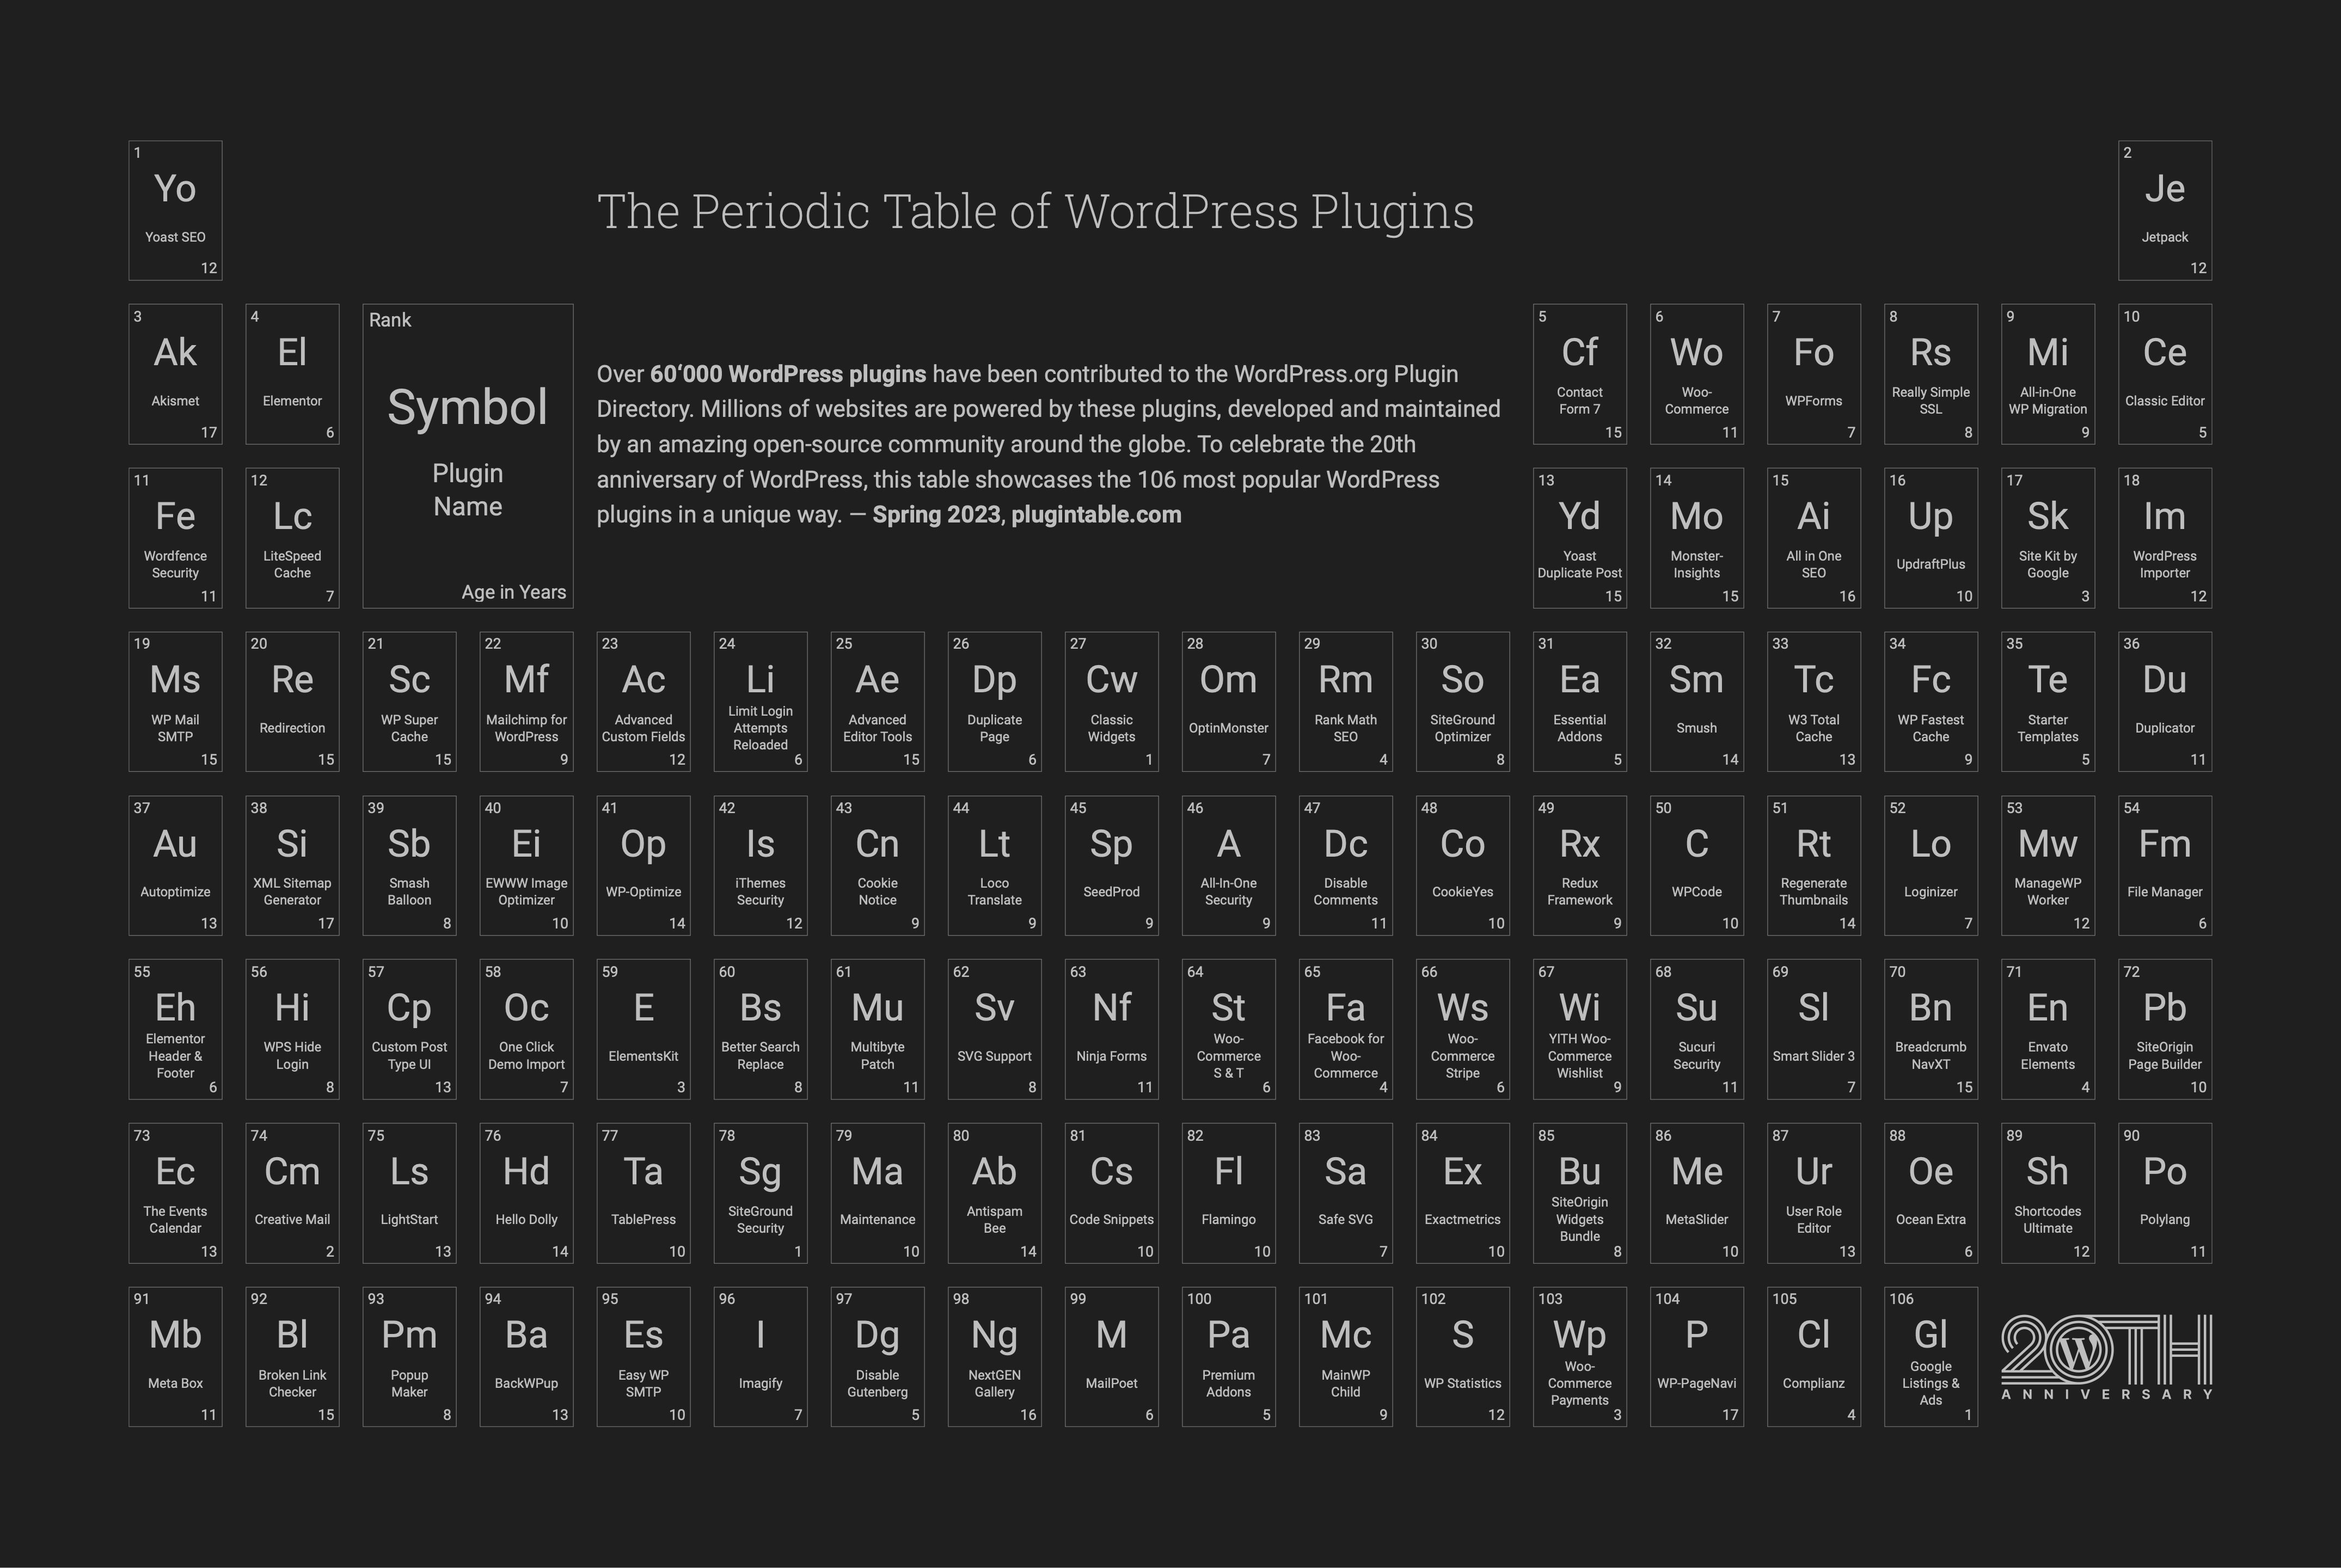 The periodic table of WordPress plugins dark poster